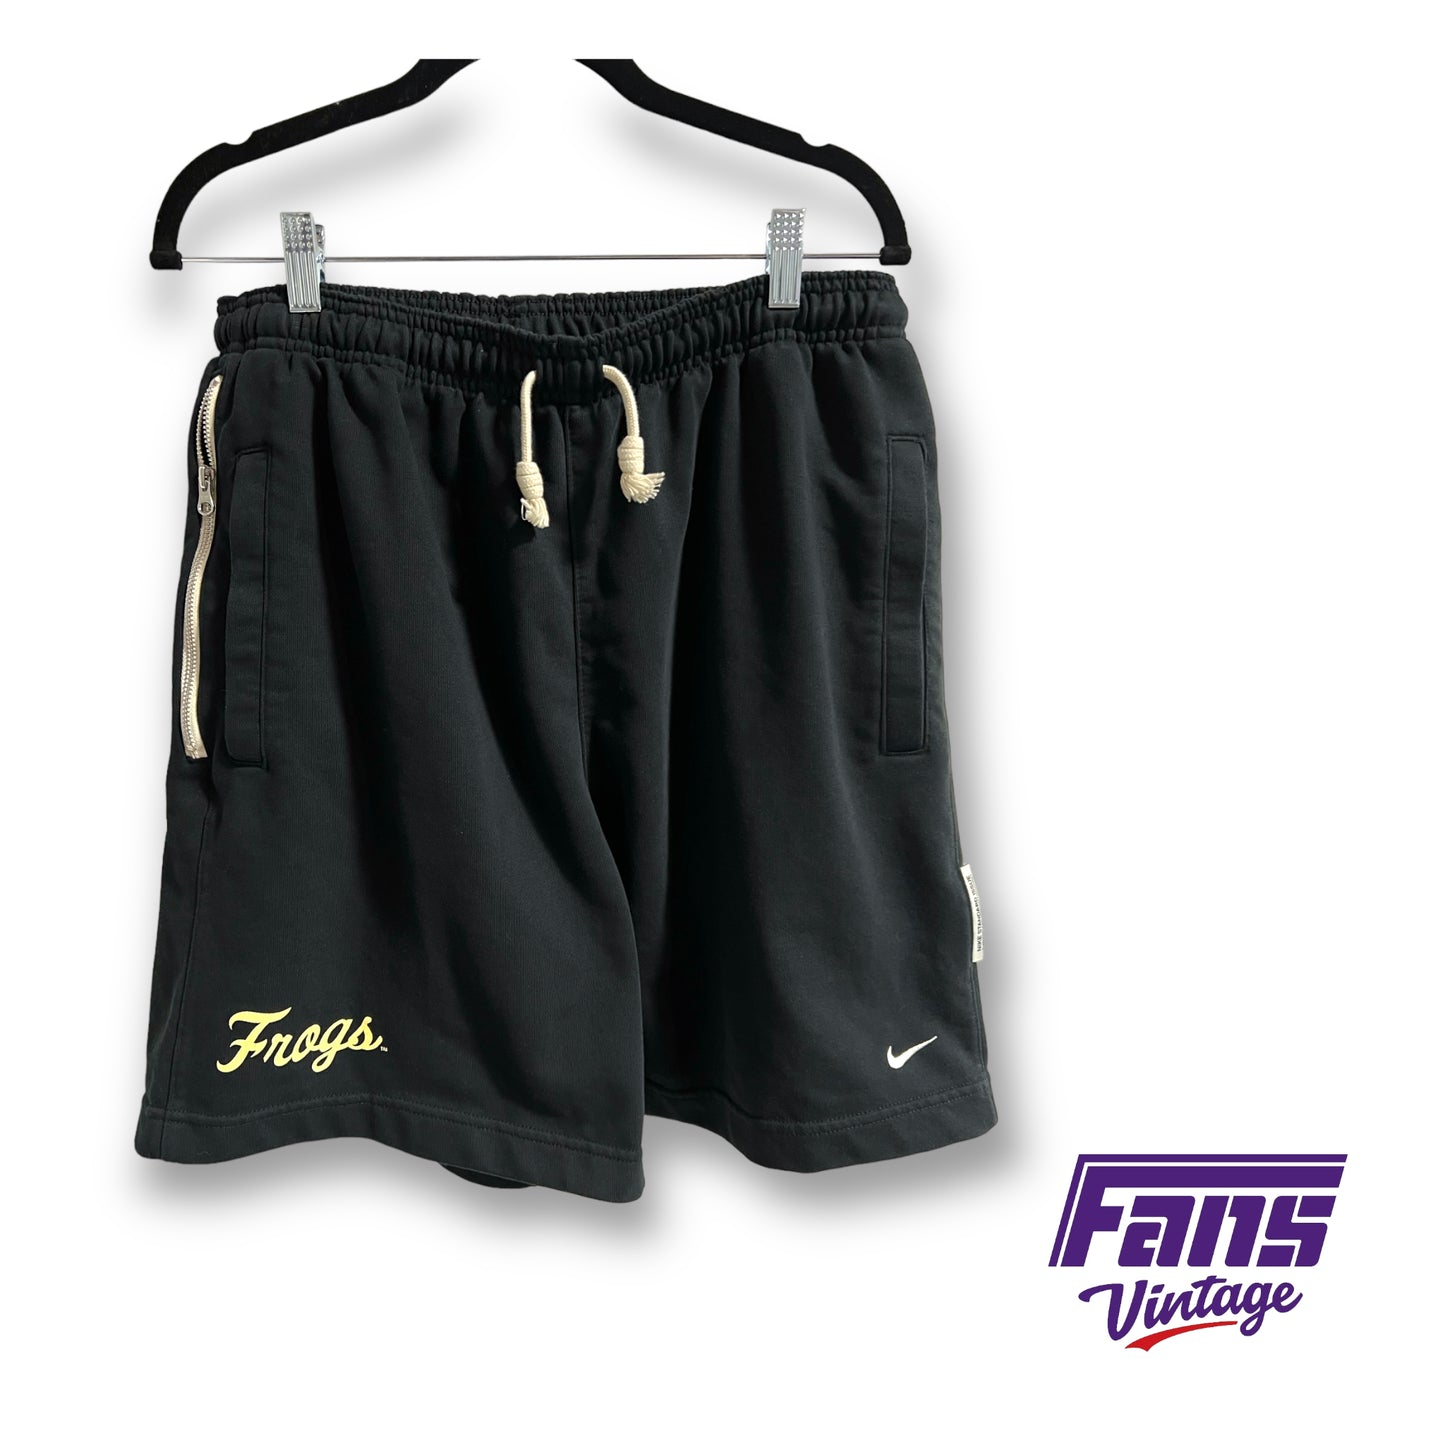 Nike TCU Basketball team issued shorts - Vintage "Frogs" Logo